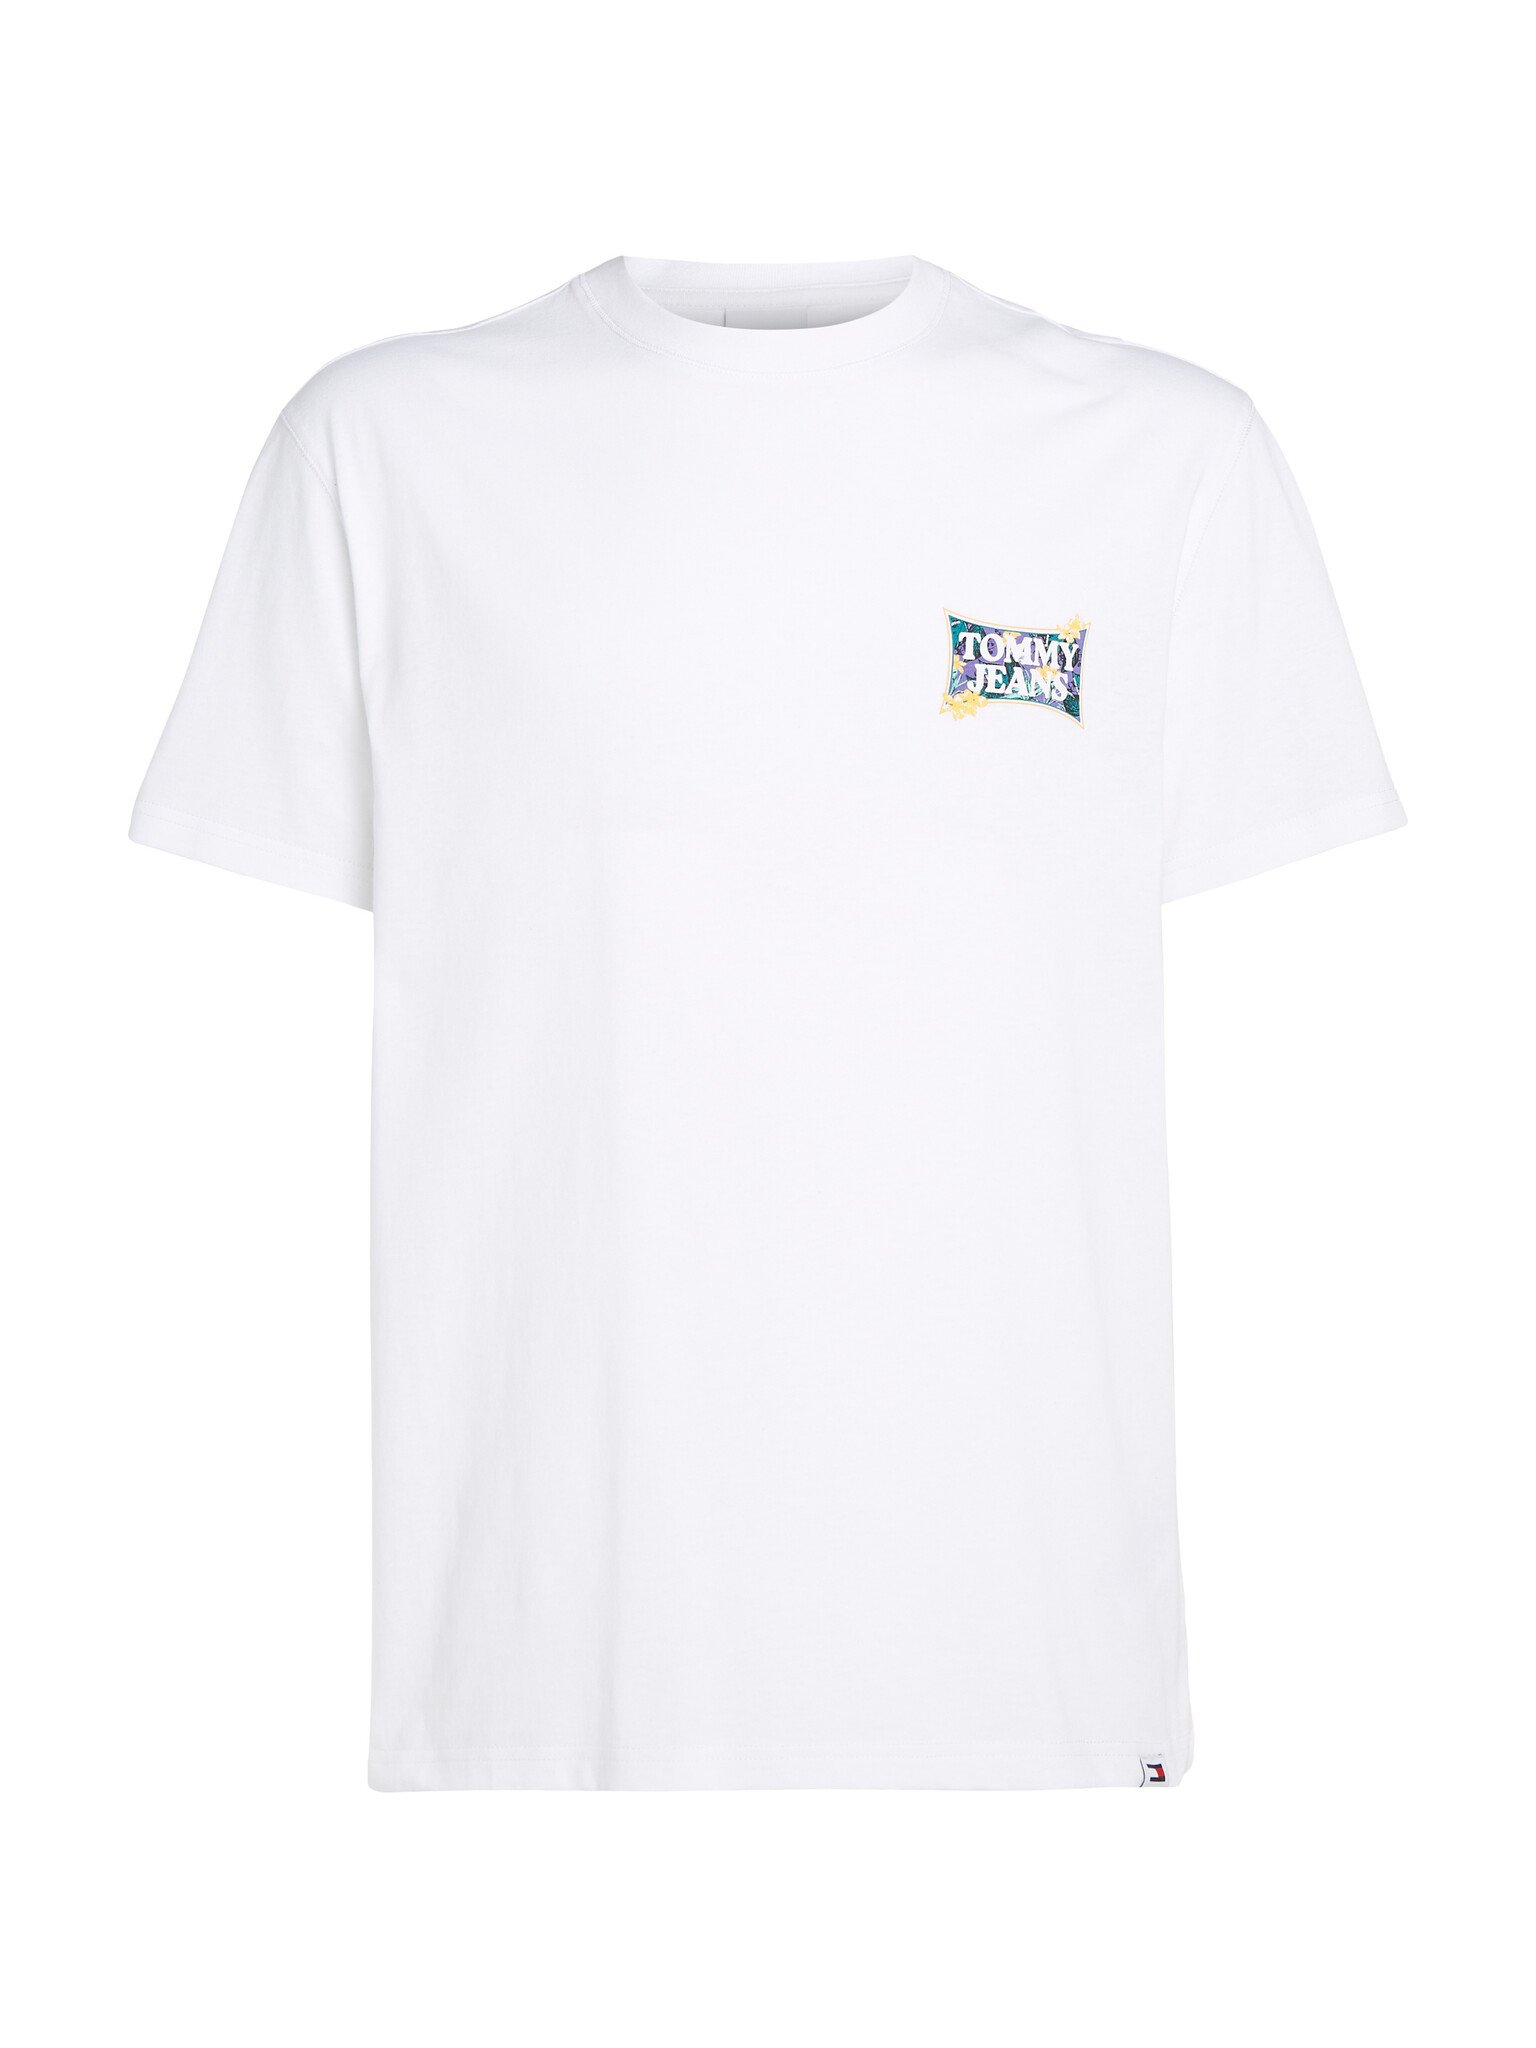 Tommy Hilfiger T-shirt White 